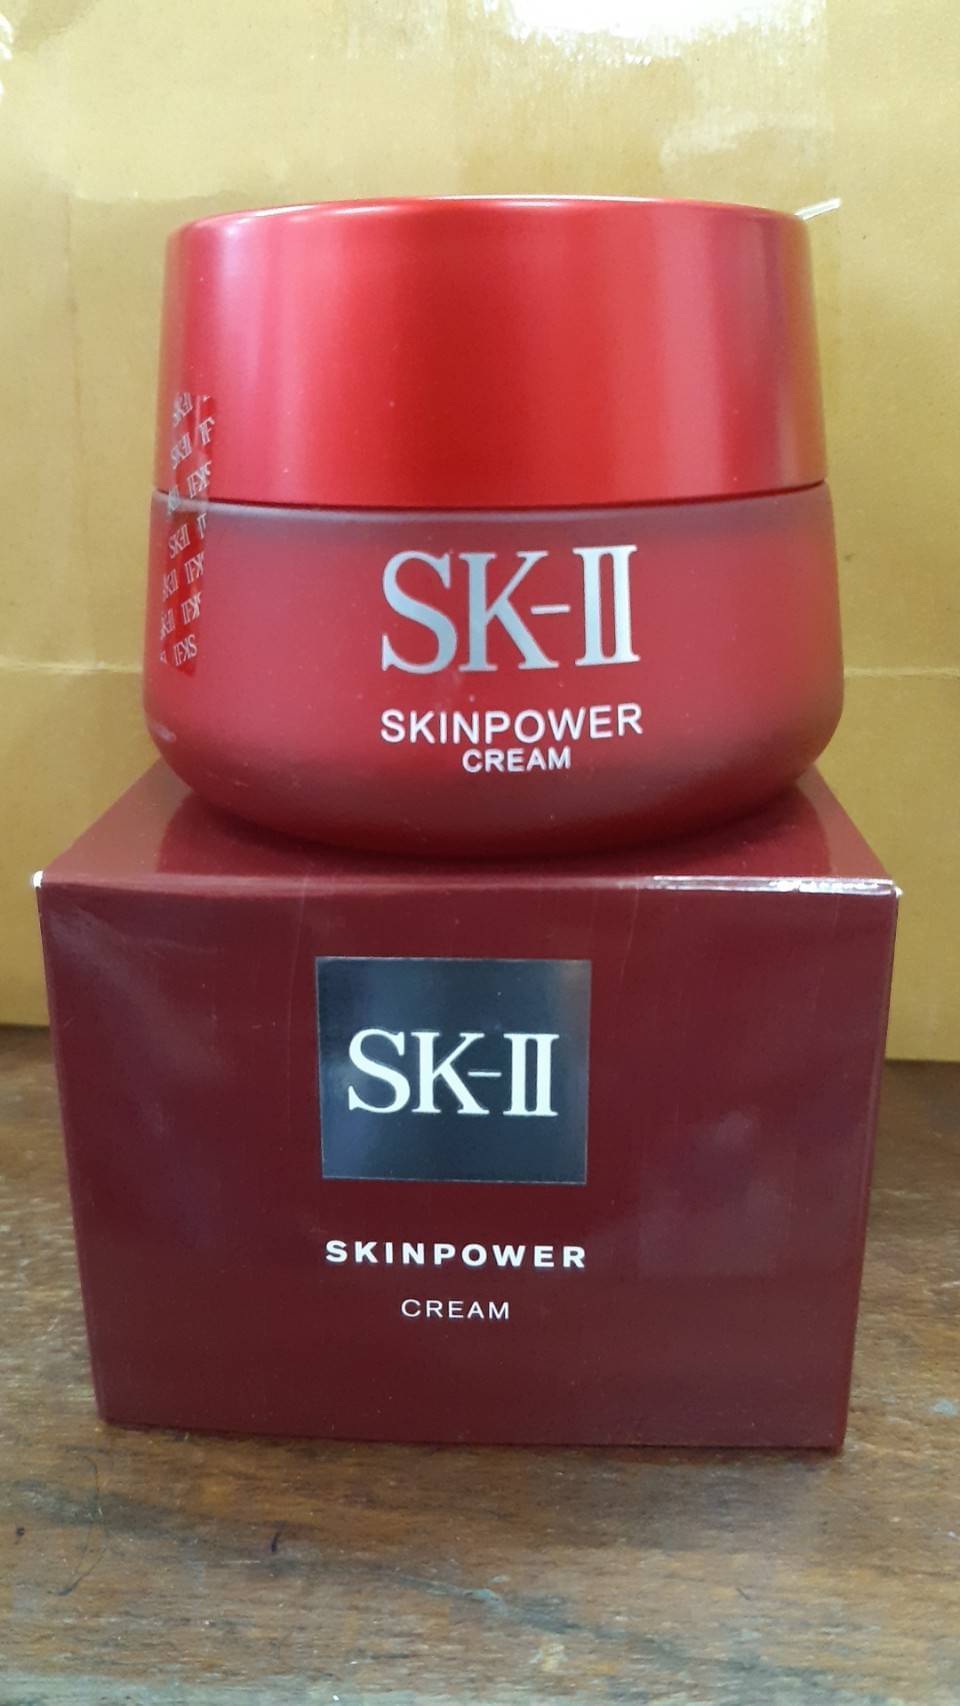 SK-II Skinpower Cream 80g รุ่นใหม่ล่าสุด พัฒนาจาก R.N.A.รูปโชว์ถ่ายจากสินค้าจริงที่จำหน่าย 0